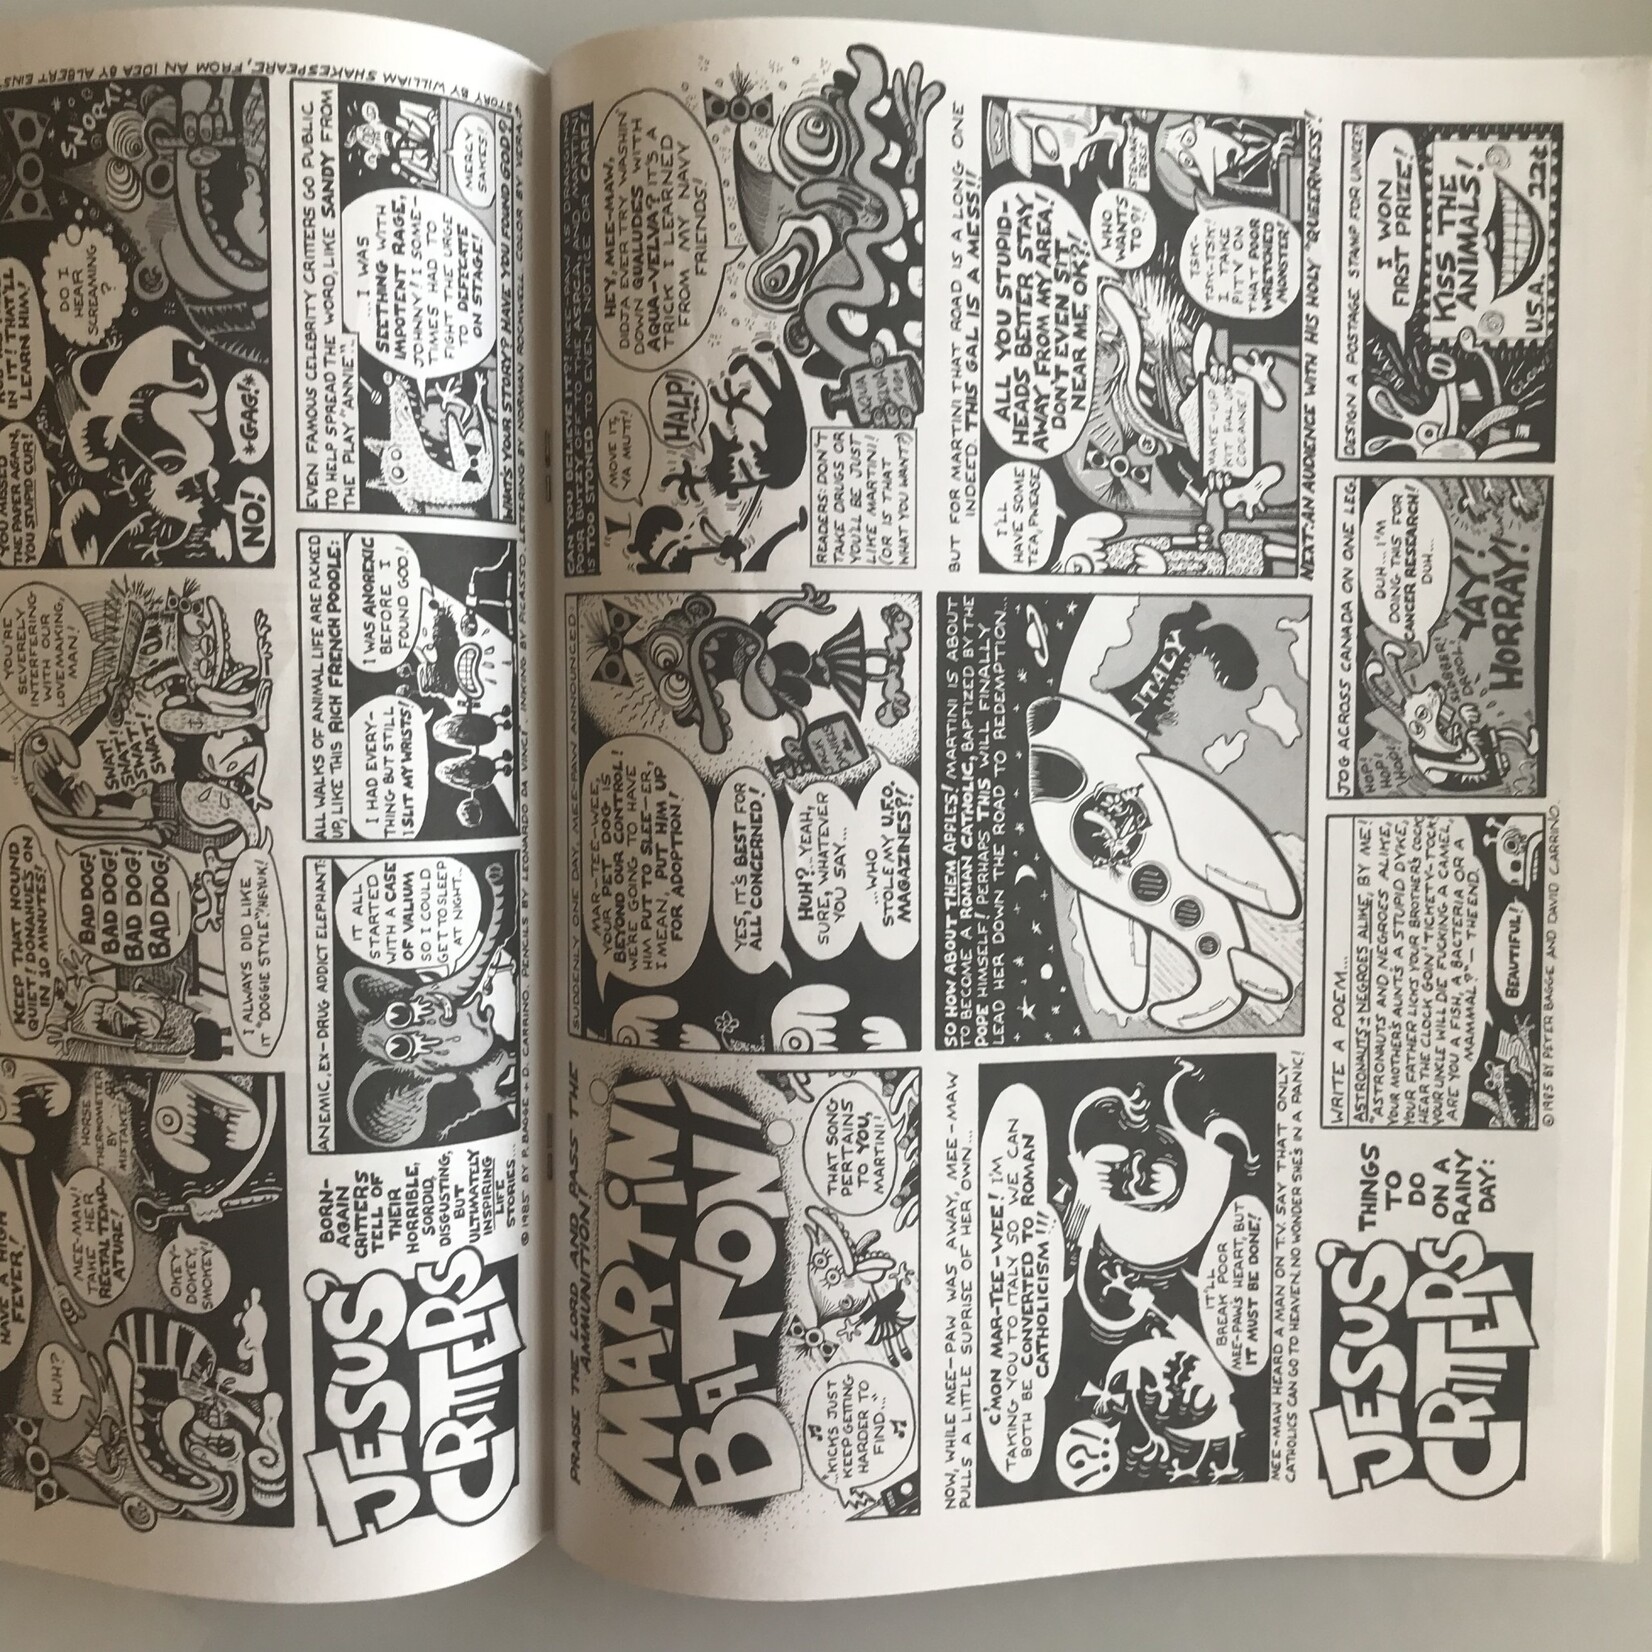 Weirdo - Vol. 1 #14 Fall 1985 (1993 Printing) - Comic Book